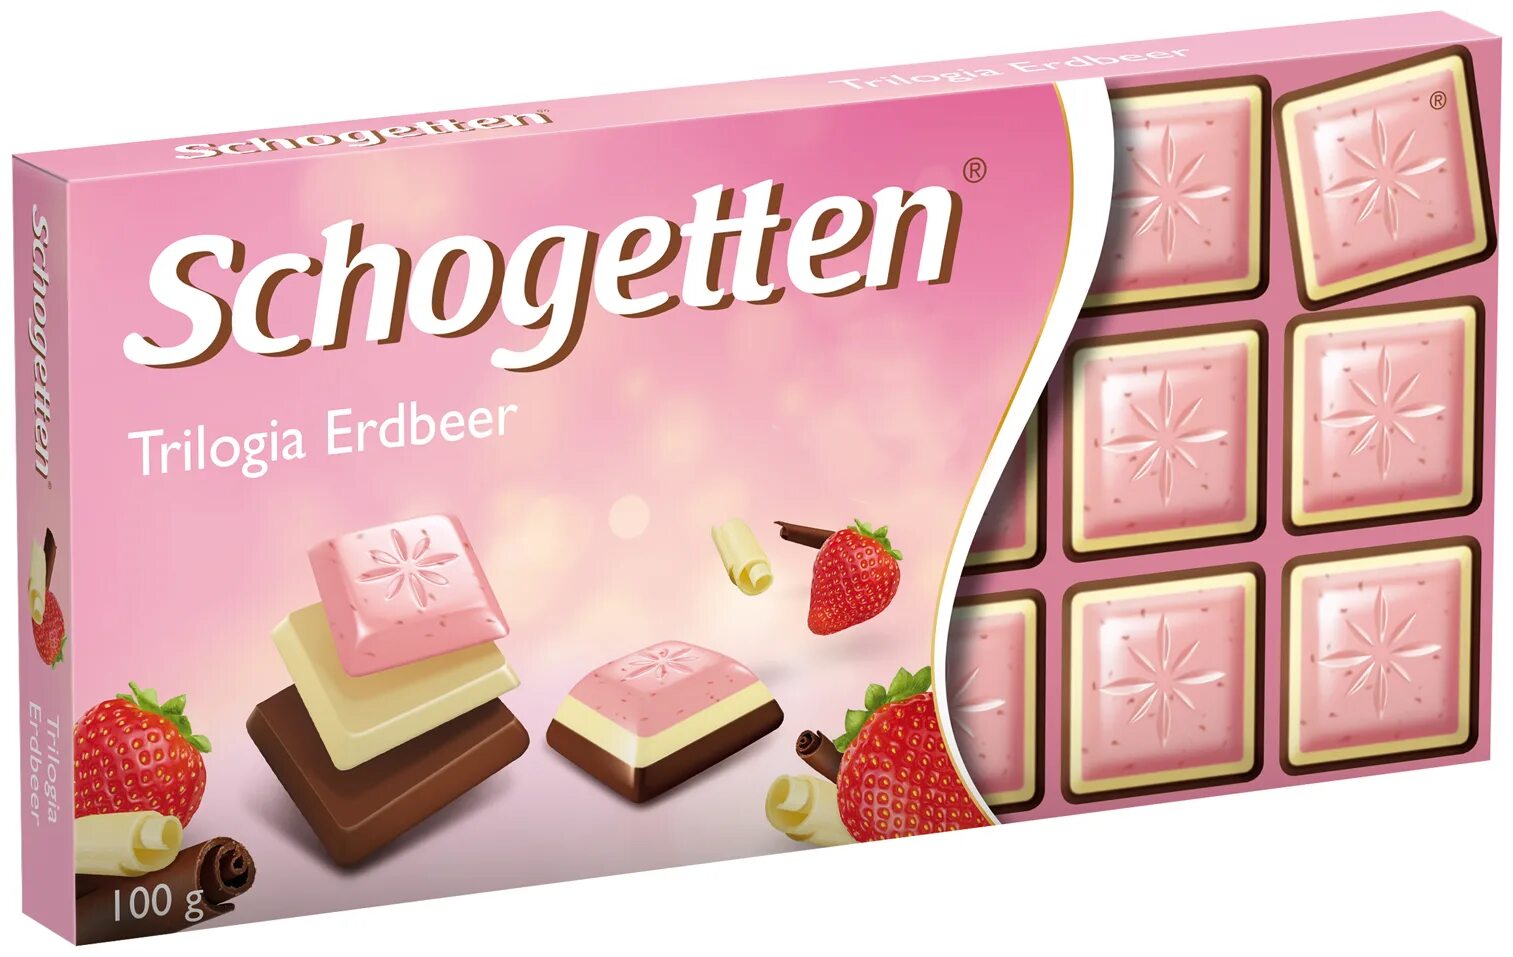 Шоколад Schogetten trilogia. Шоколад Schogetten трилогия 100г. Немецкий шоколад Schogetten вкусы. Германская шоколадка Schogetten белая.